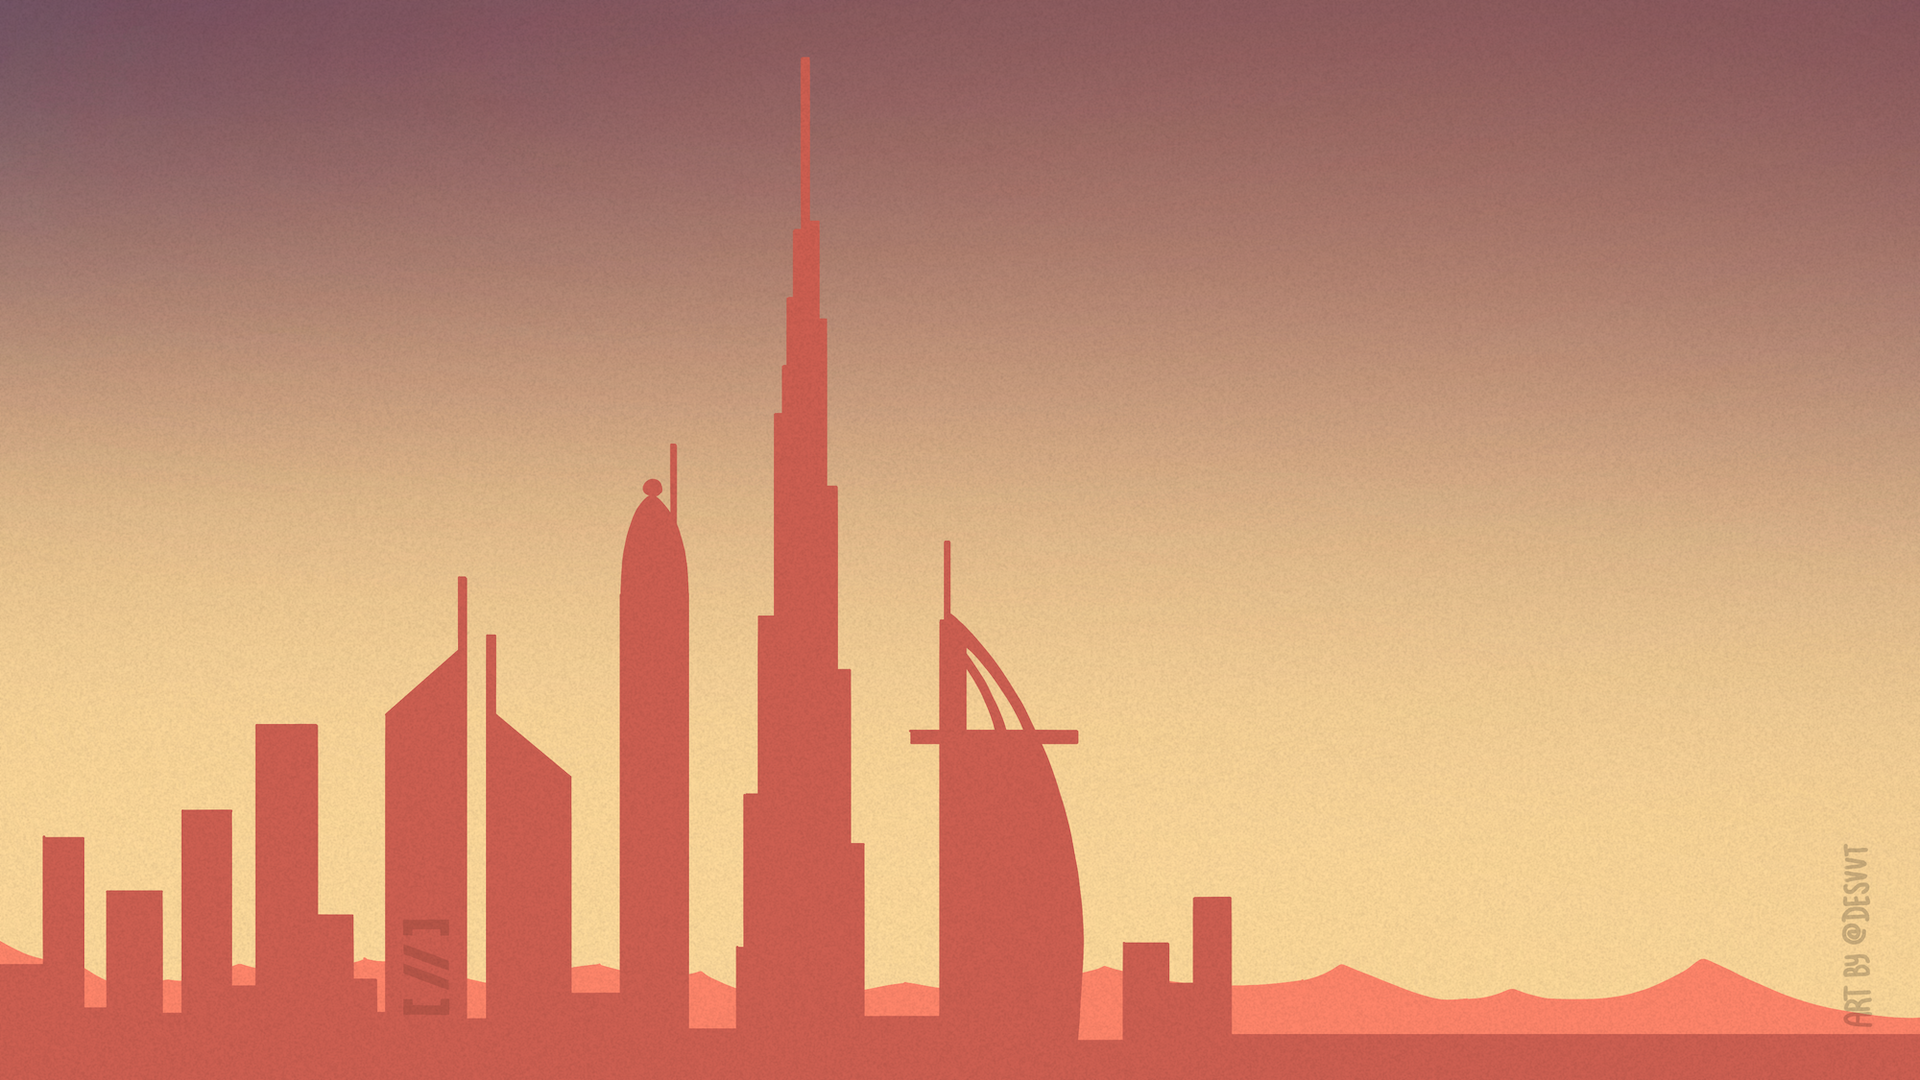 Food Scene in Dubai: Data Analysis Helps Open Restaurant in Right Location